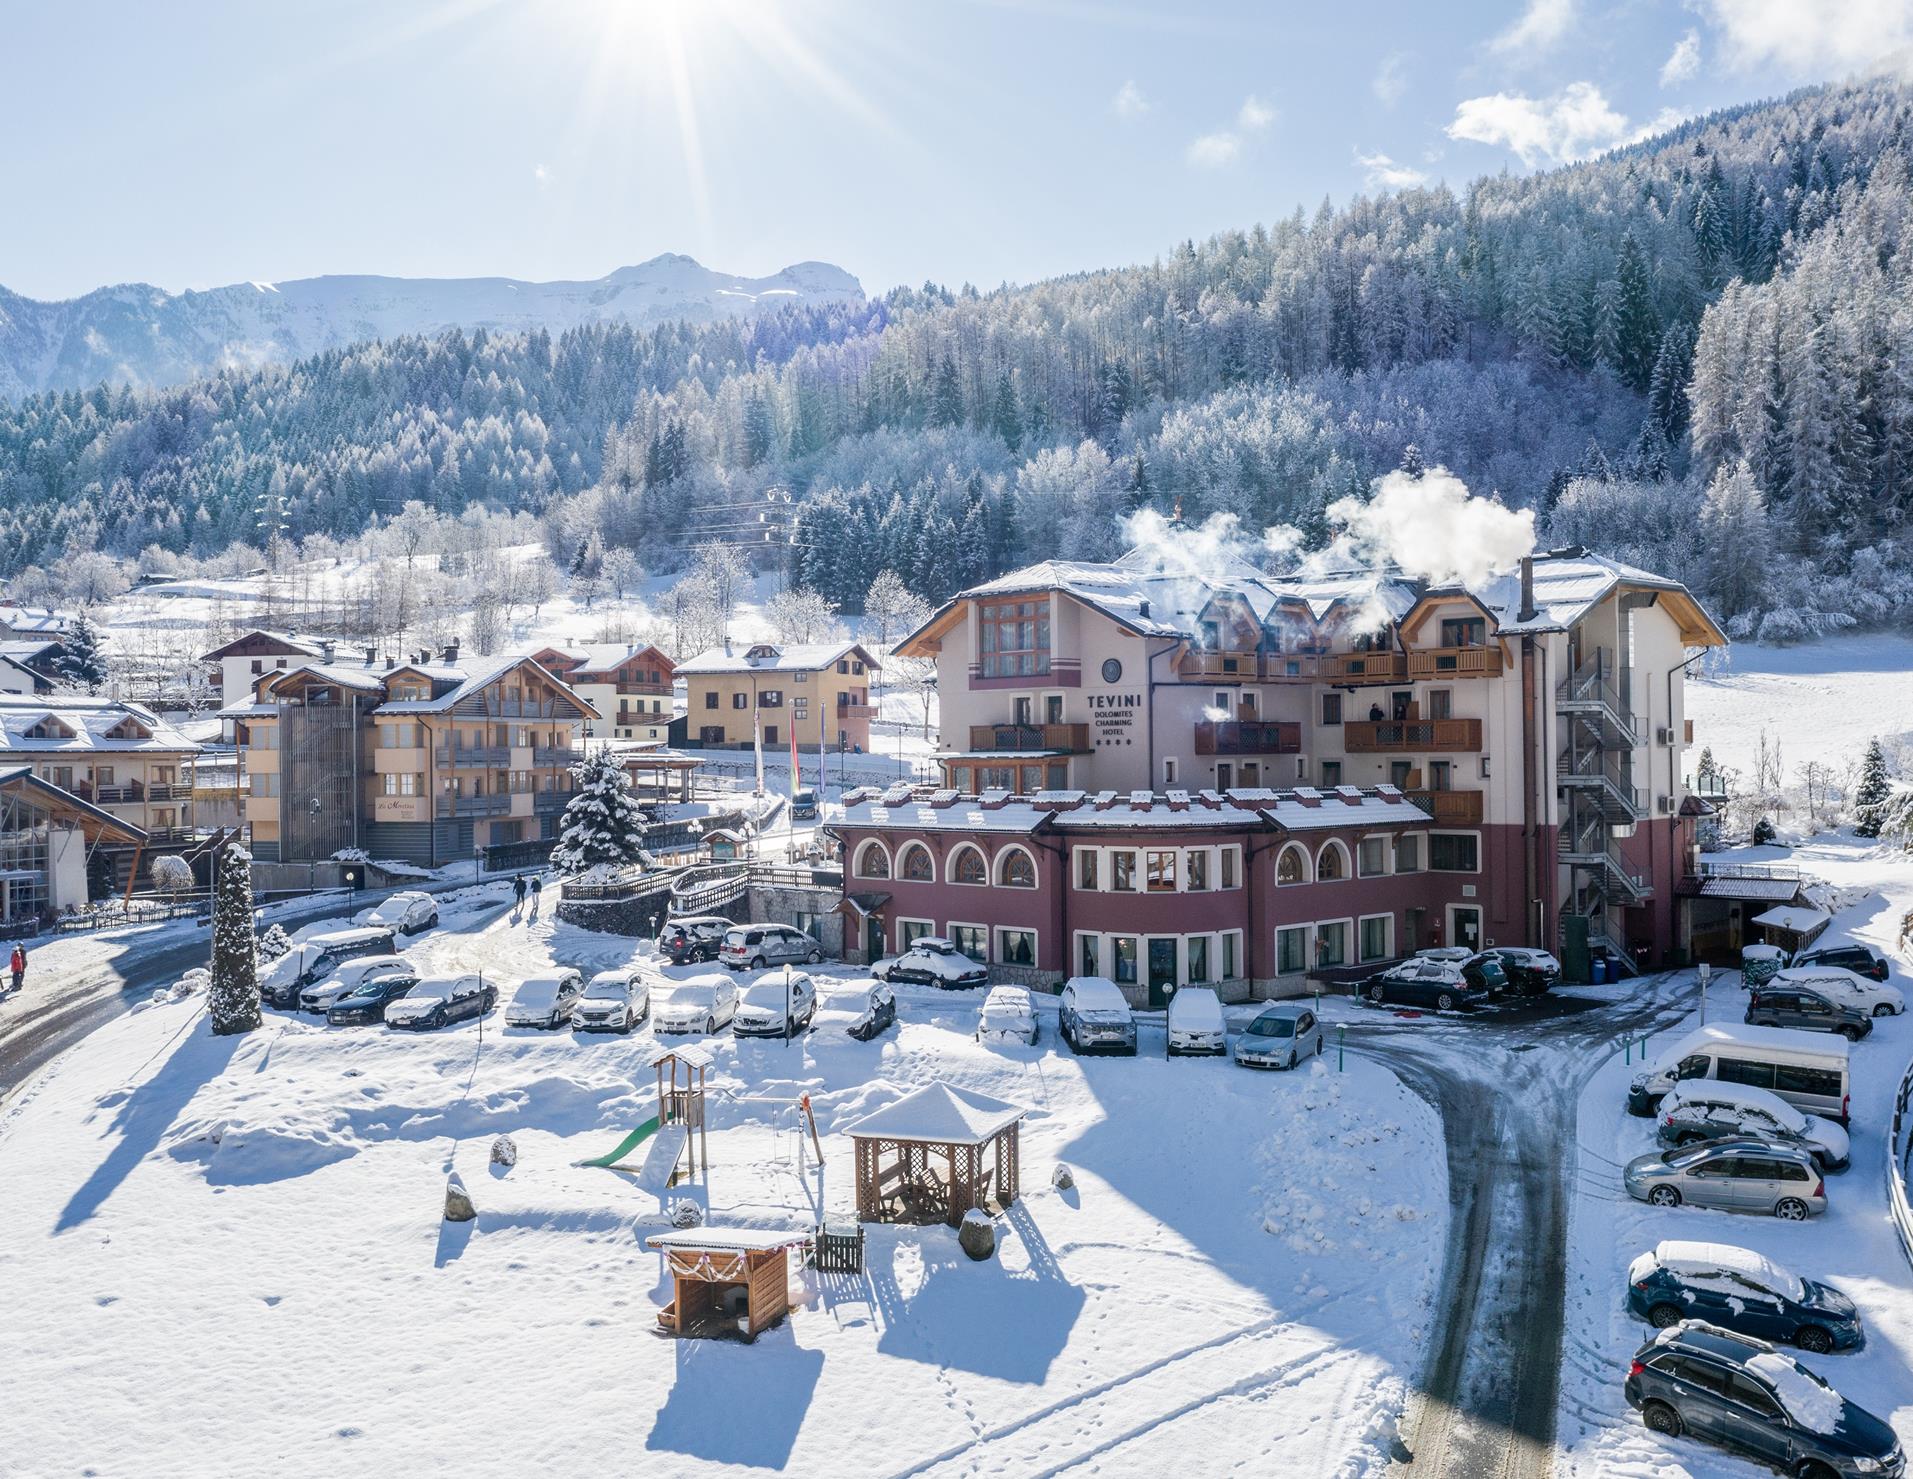 Tevini Dolomites Charming Hotel - The Hotel